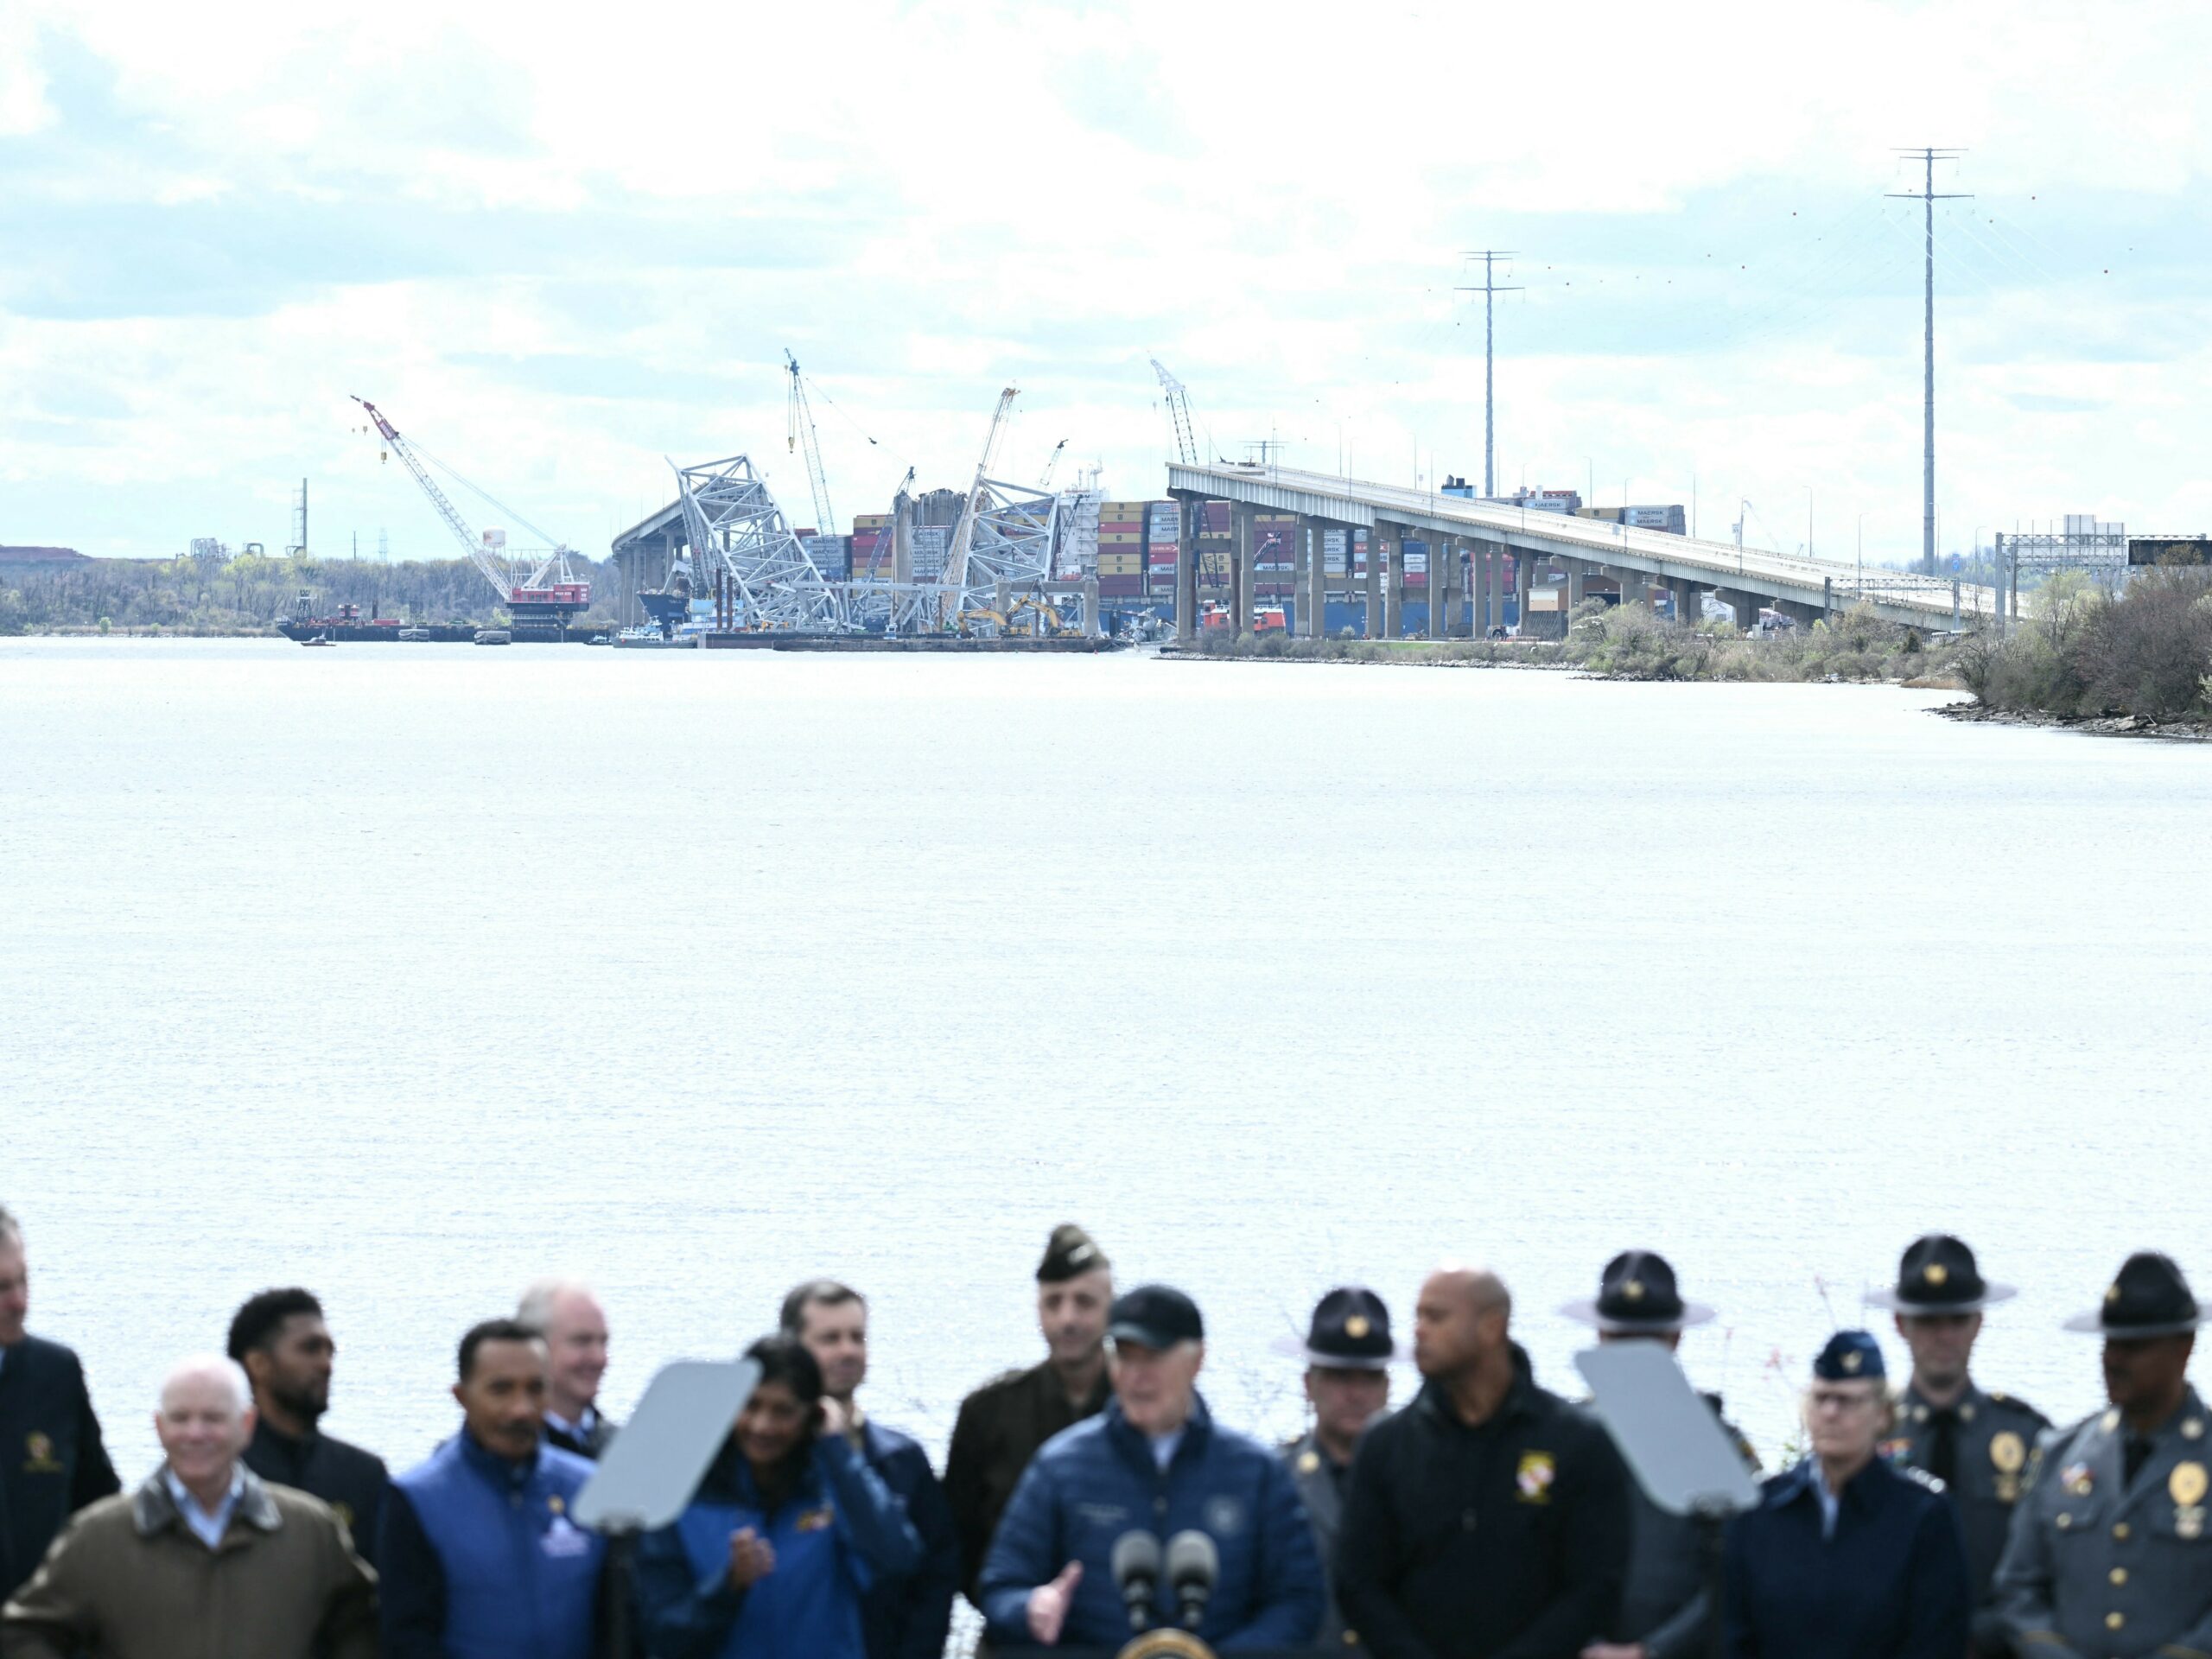 President Biden speaks about efforts to rebuild the Francis Scott Key Bridge in Baltimore after surveying the damage.